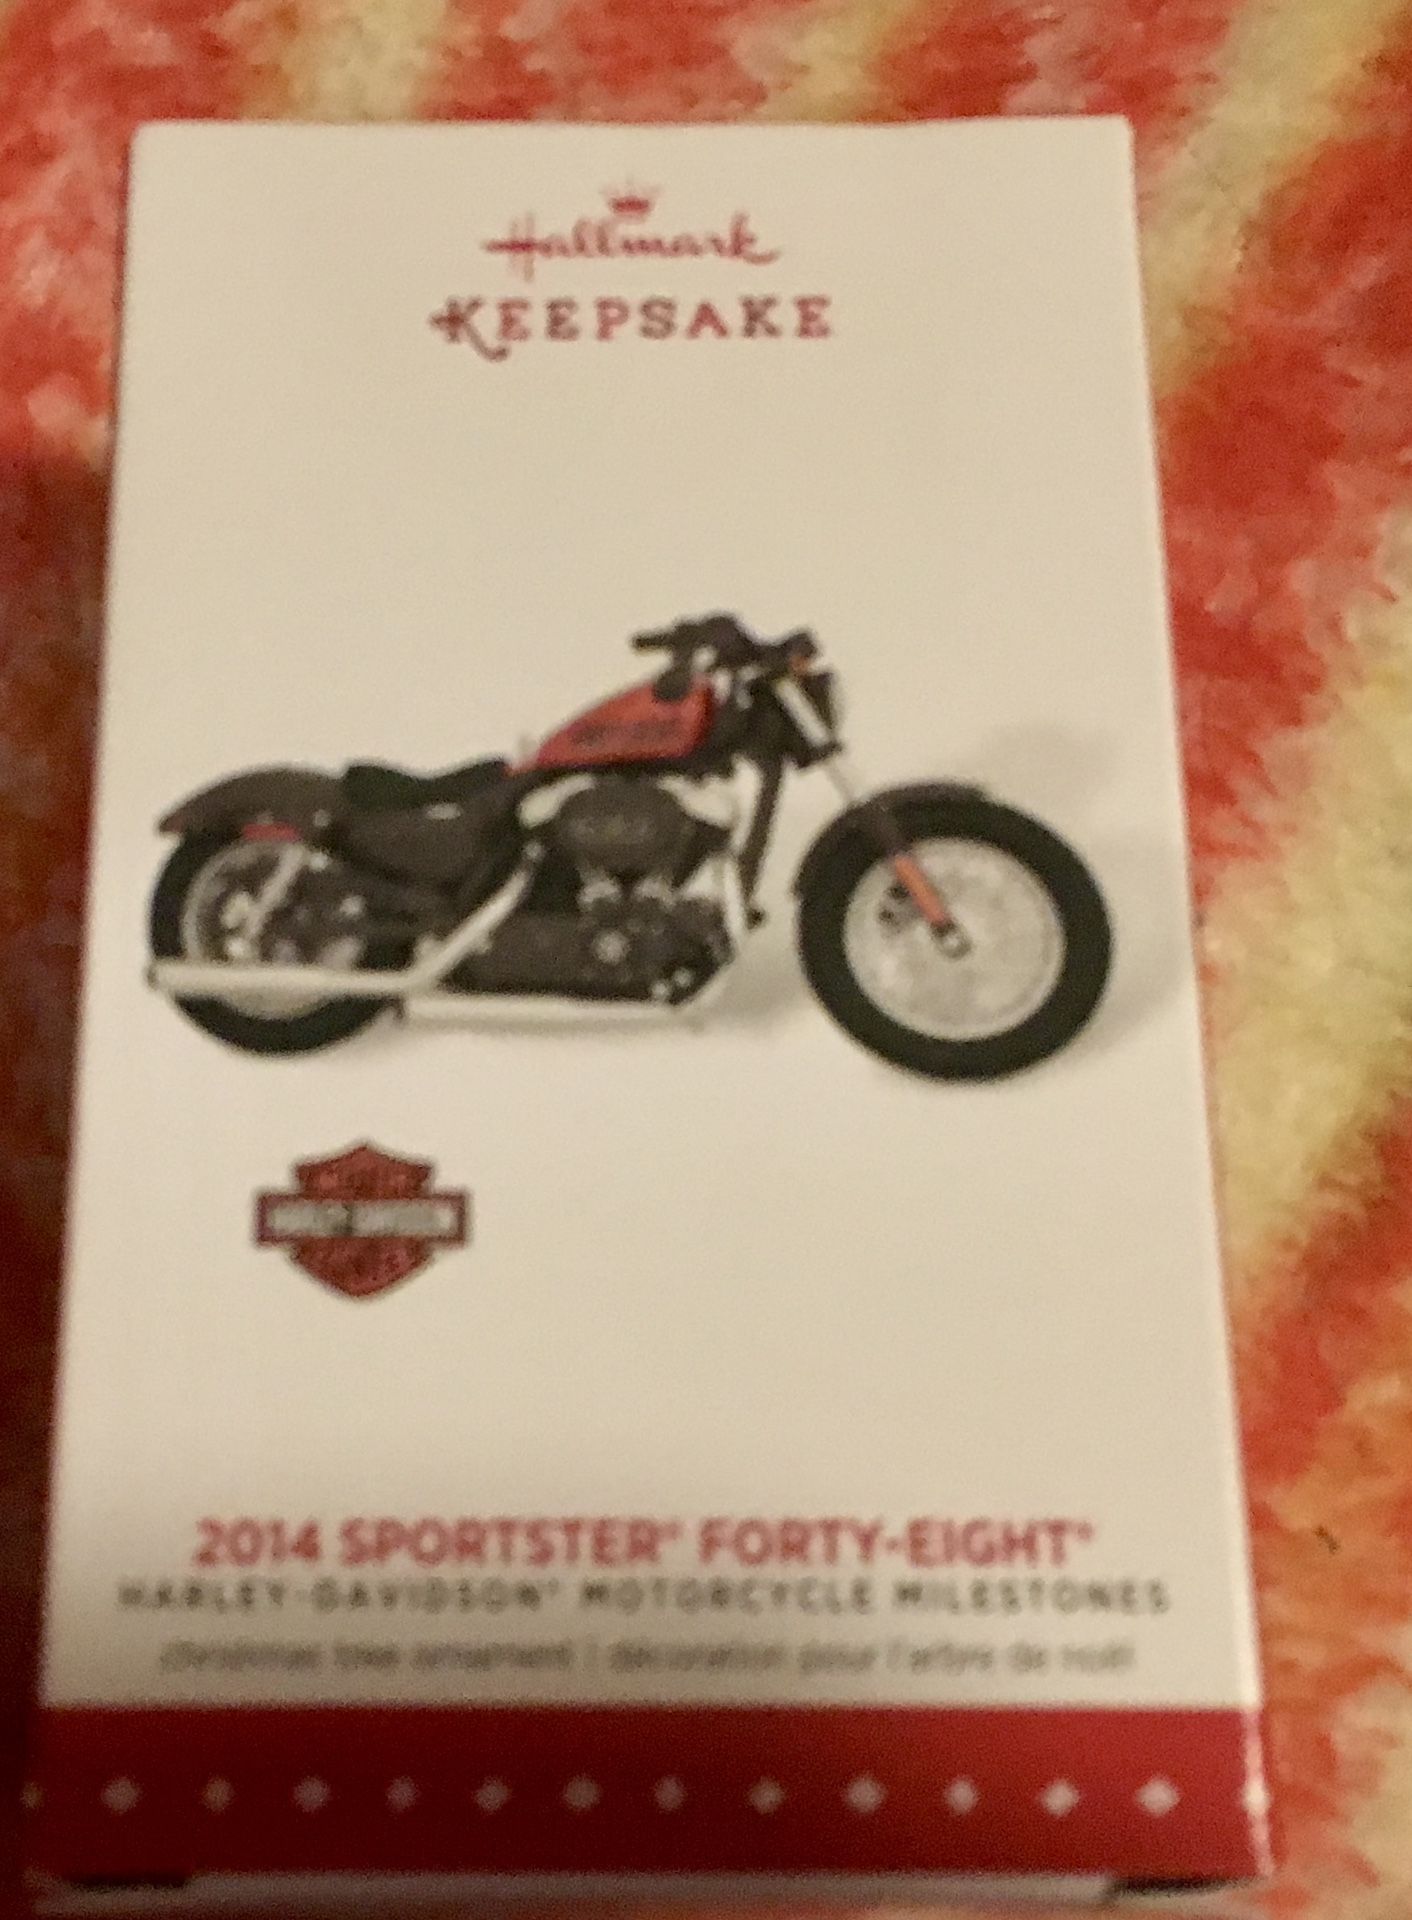 NEW Harley-Davidson Hallmark 2015 Keepsake Ornament 2014 Sportster "Forty-Eight”